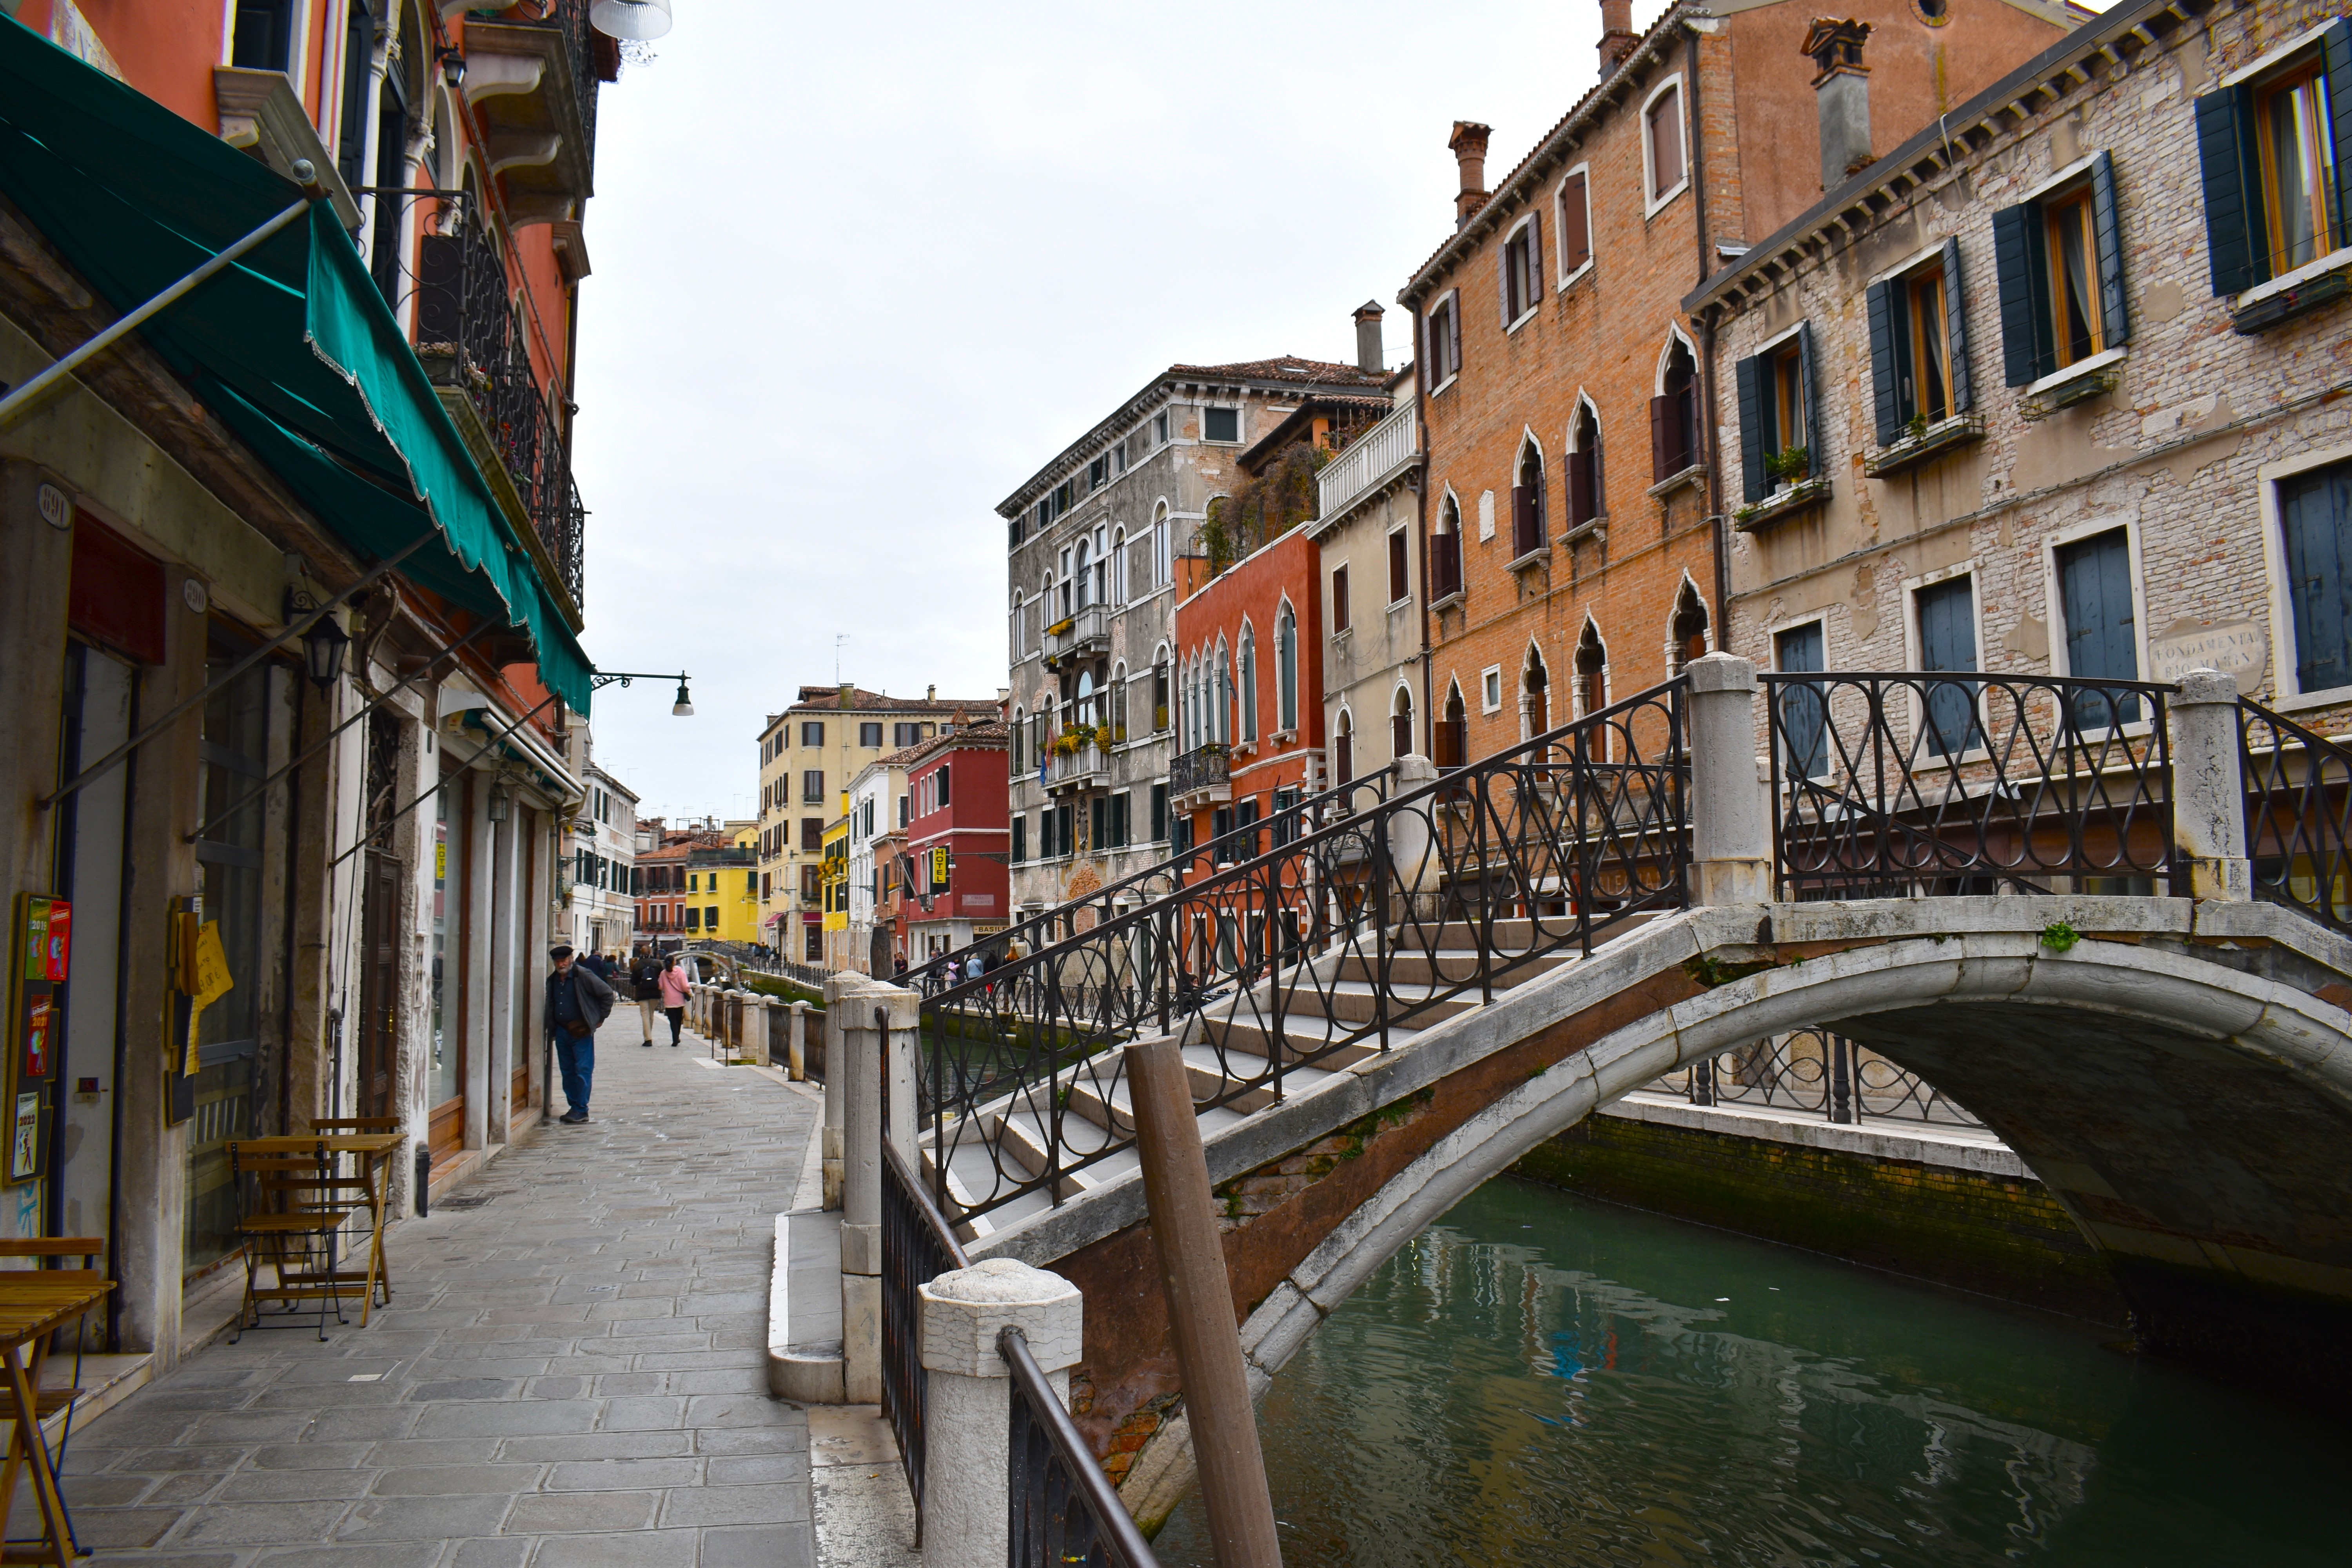 A bridge over a canal in Venice